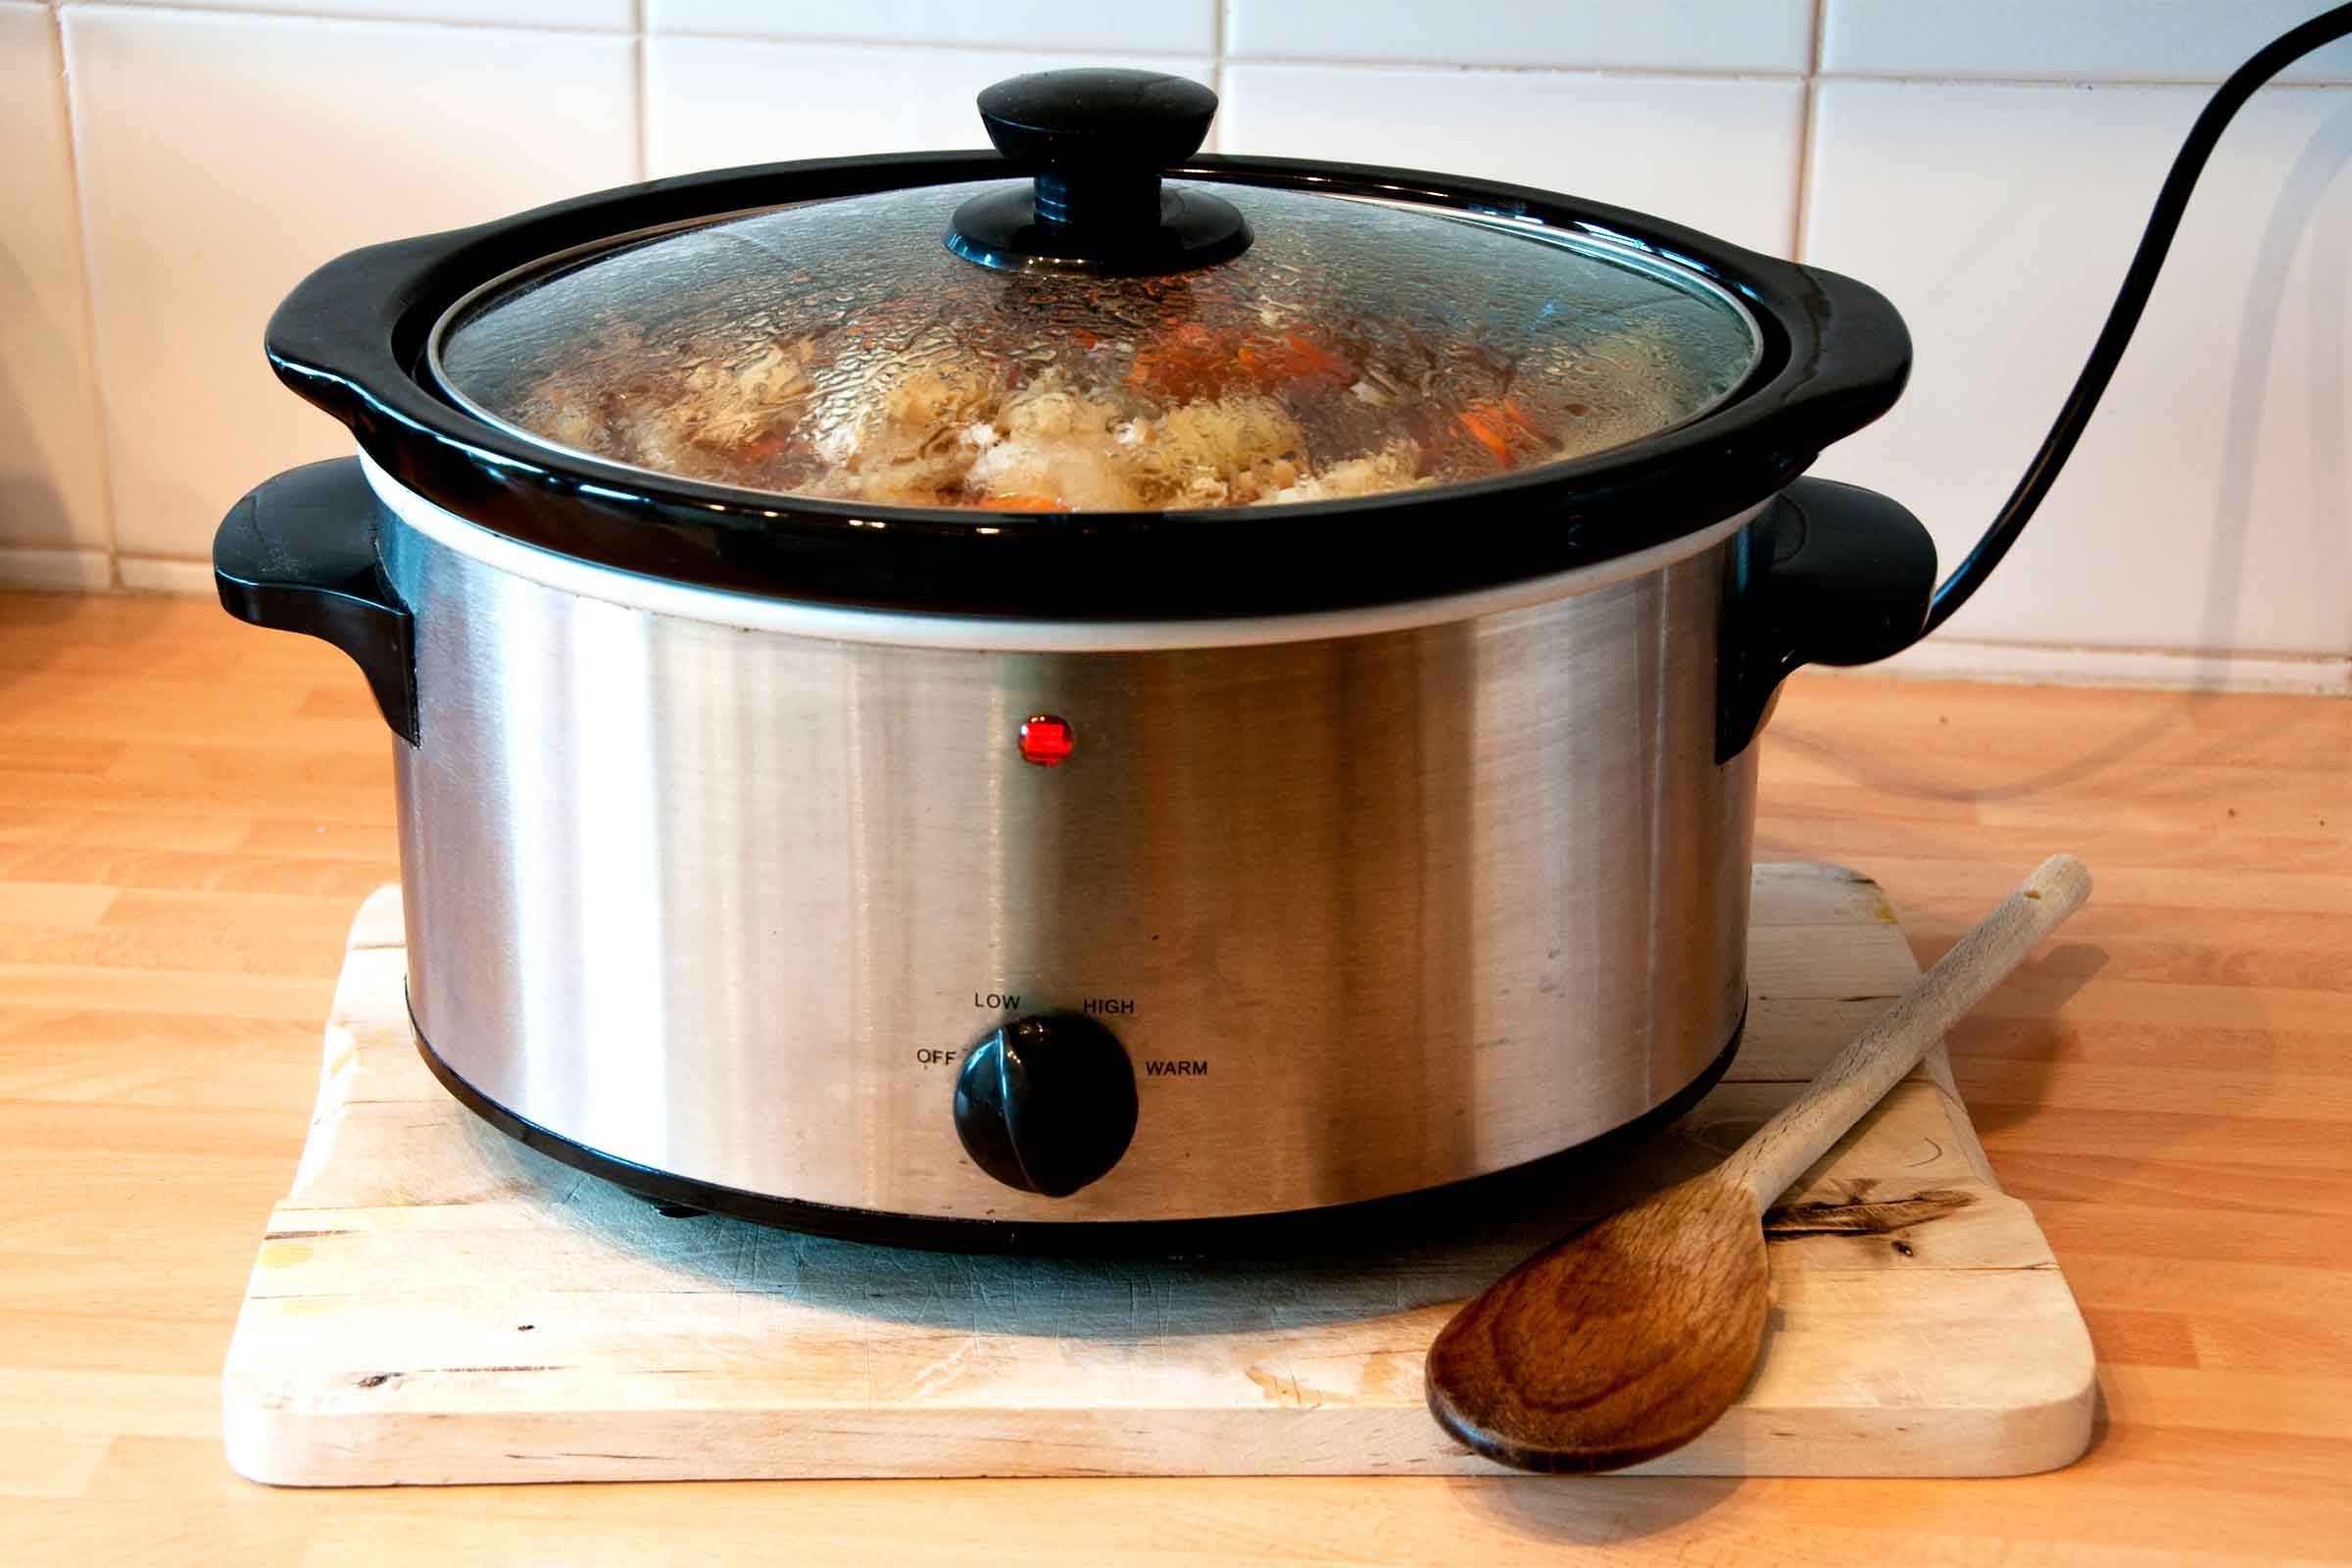 Crock Pot Heat Settings Symbols : Crock-Pot® 4 qt. Cook & Carry Slow Cooker | Bed Bath & Beyond ...